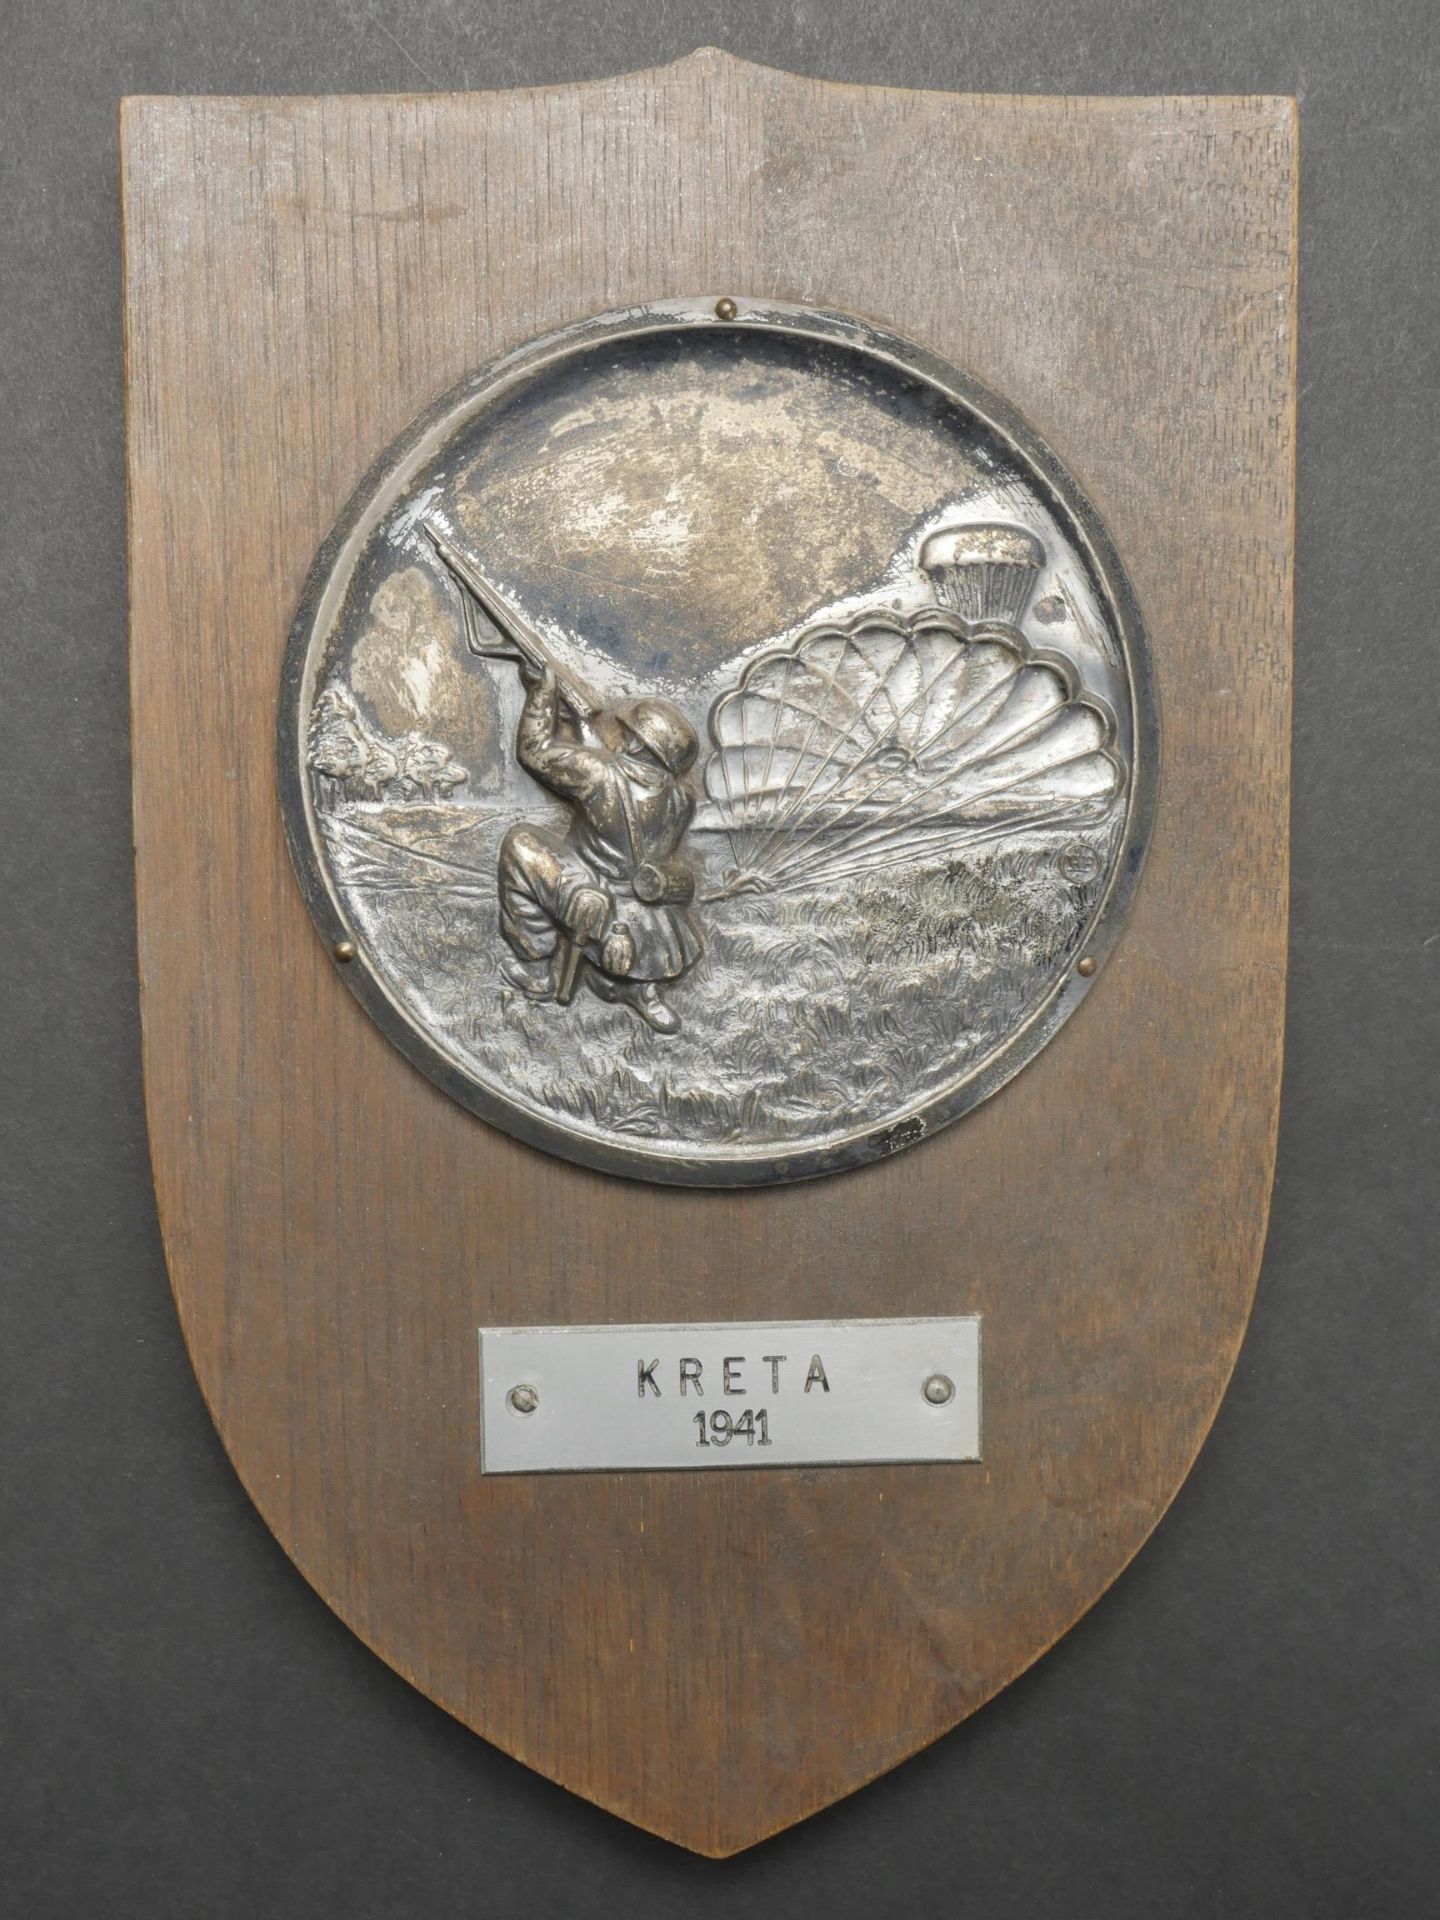 Plaquette Kreta 1941. Kreta 1941 plate.